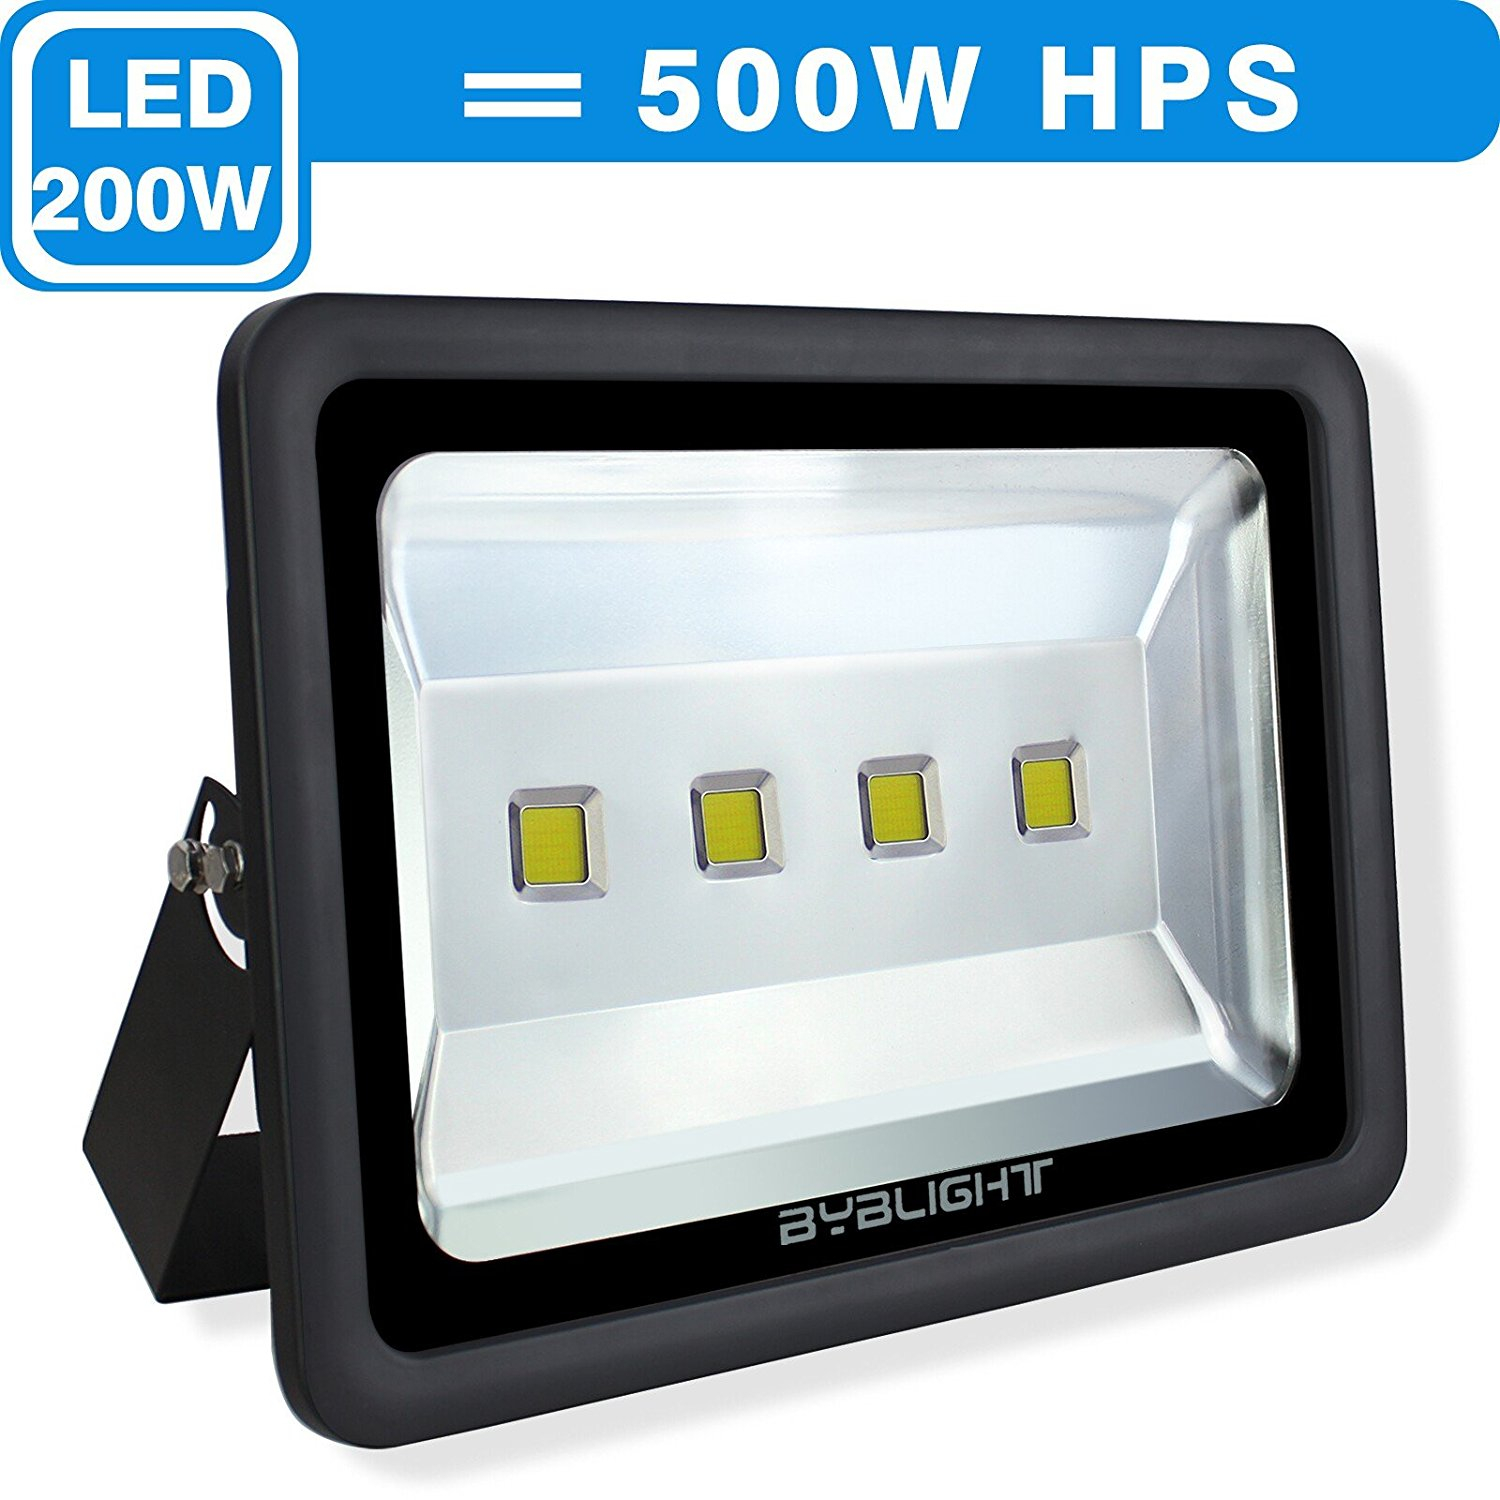 B 200 Watt Super Bright Outdoor Led Flood Light 500w Hps Bulb with regard to proportions 1500 X 1500